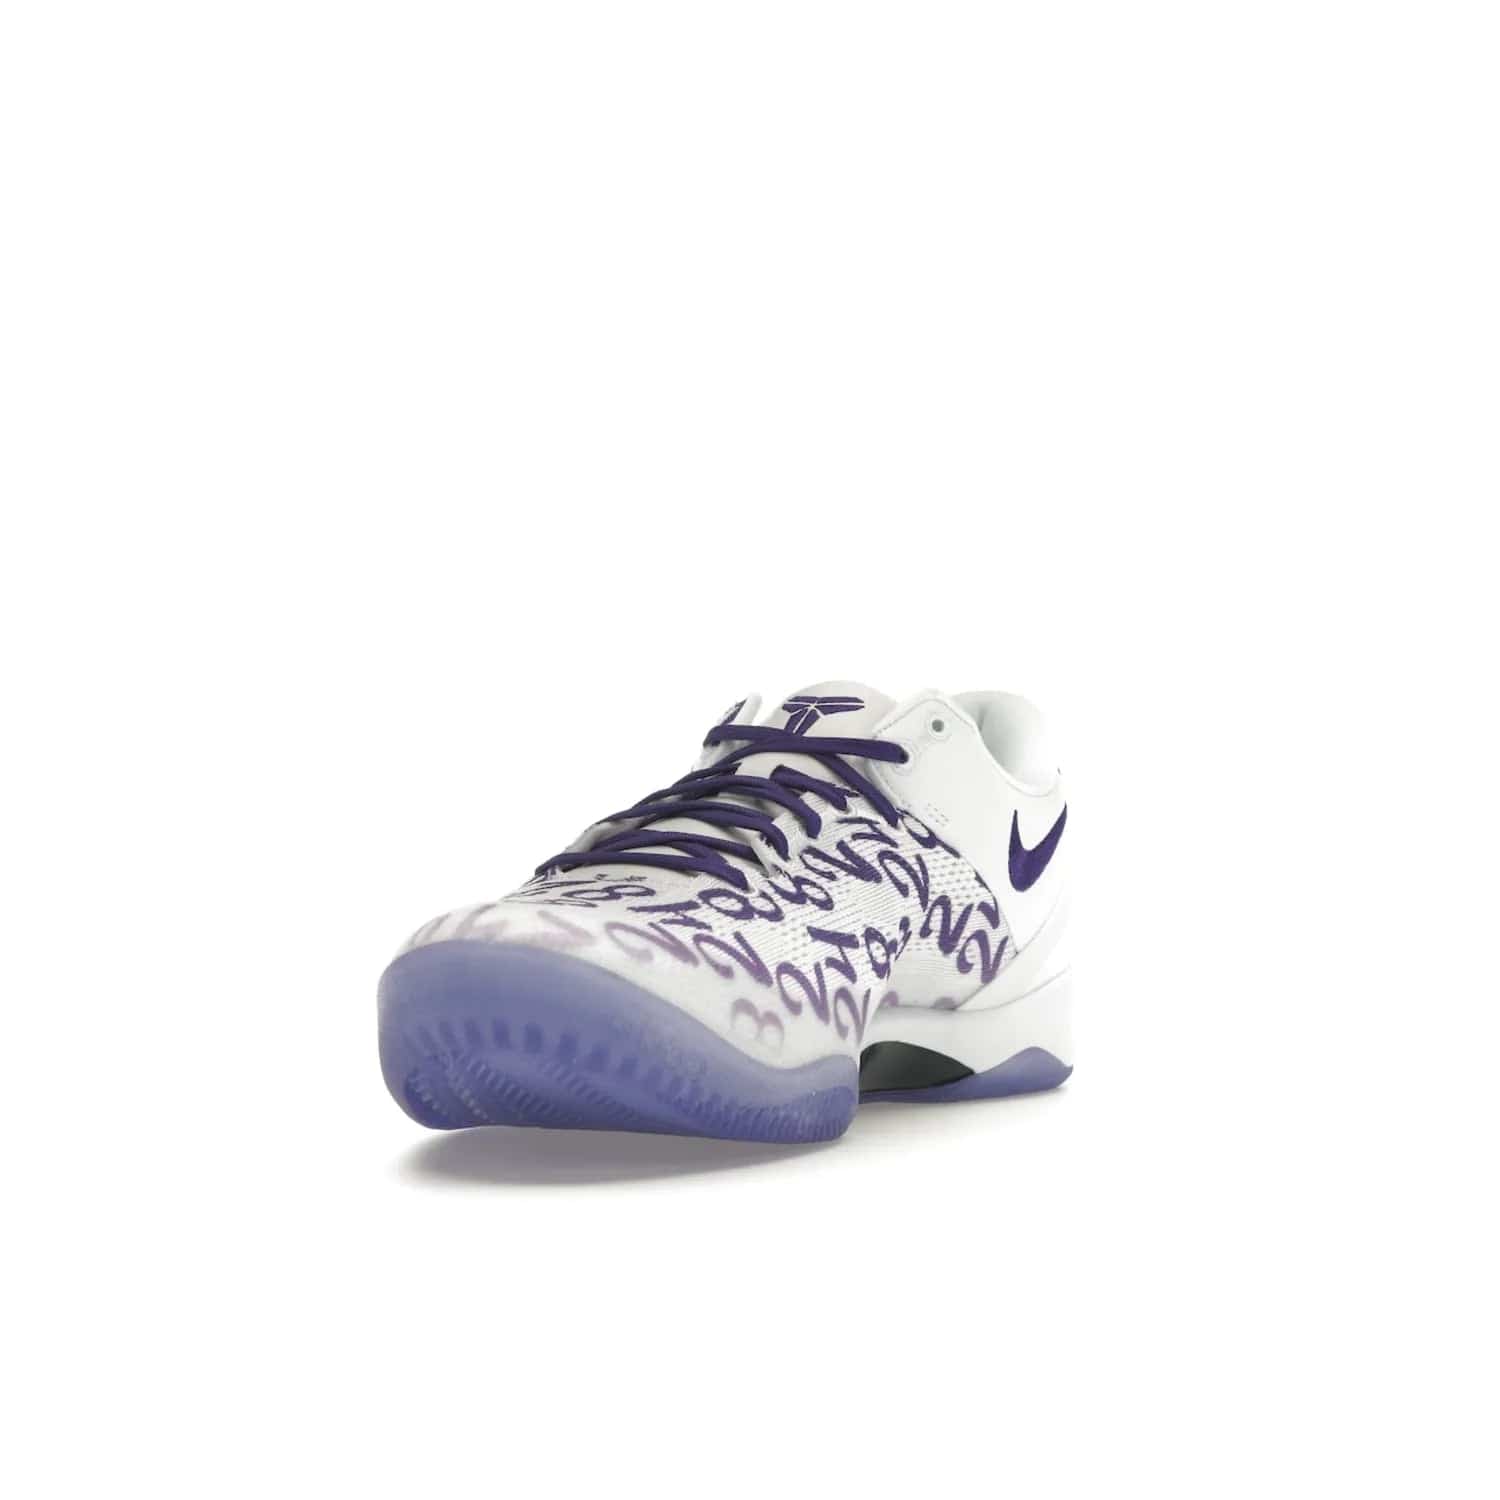 Nike Kobe 8 Protro Court Purple - Image 13 - Only at www.BallersClubKickz.com - 